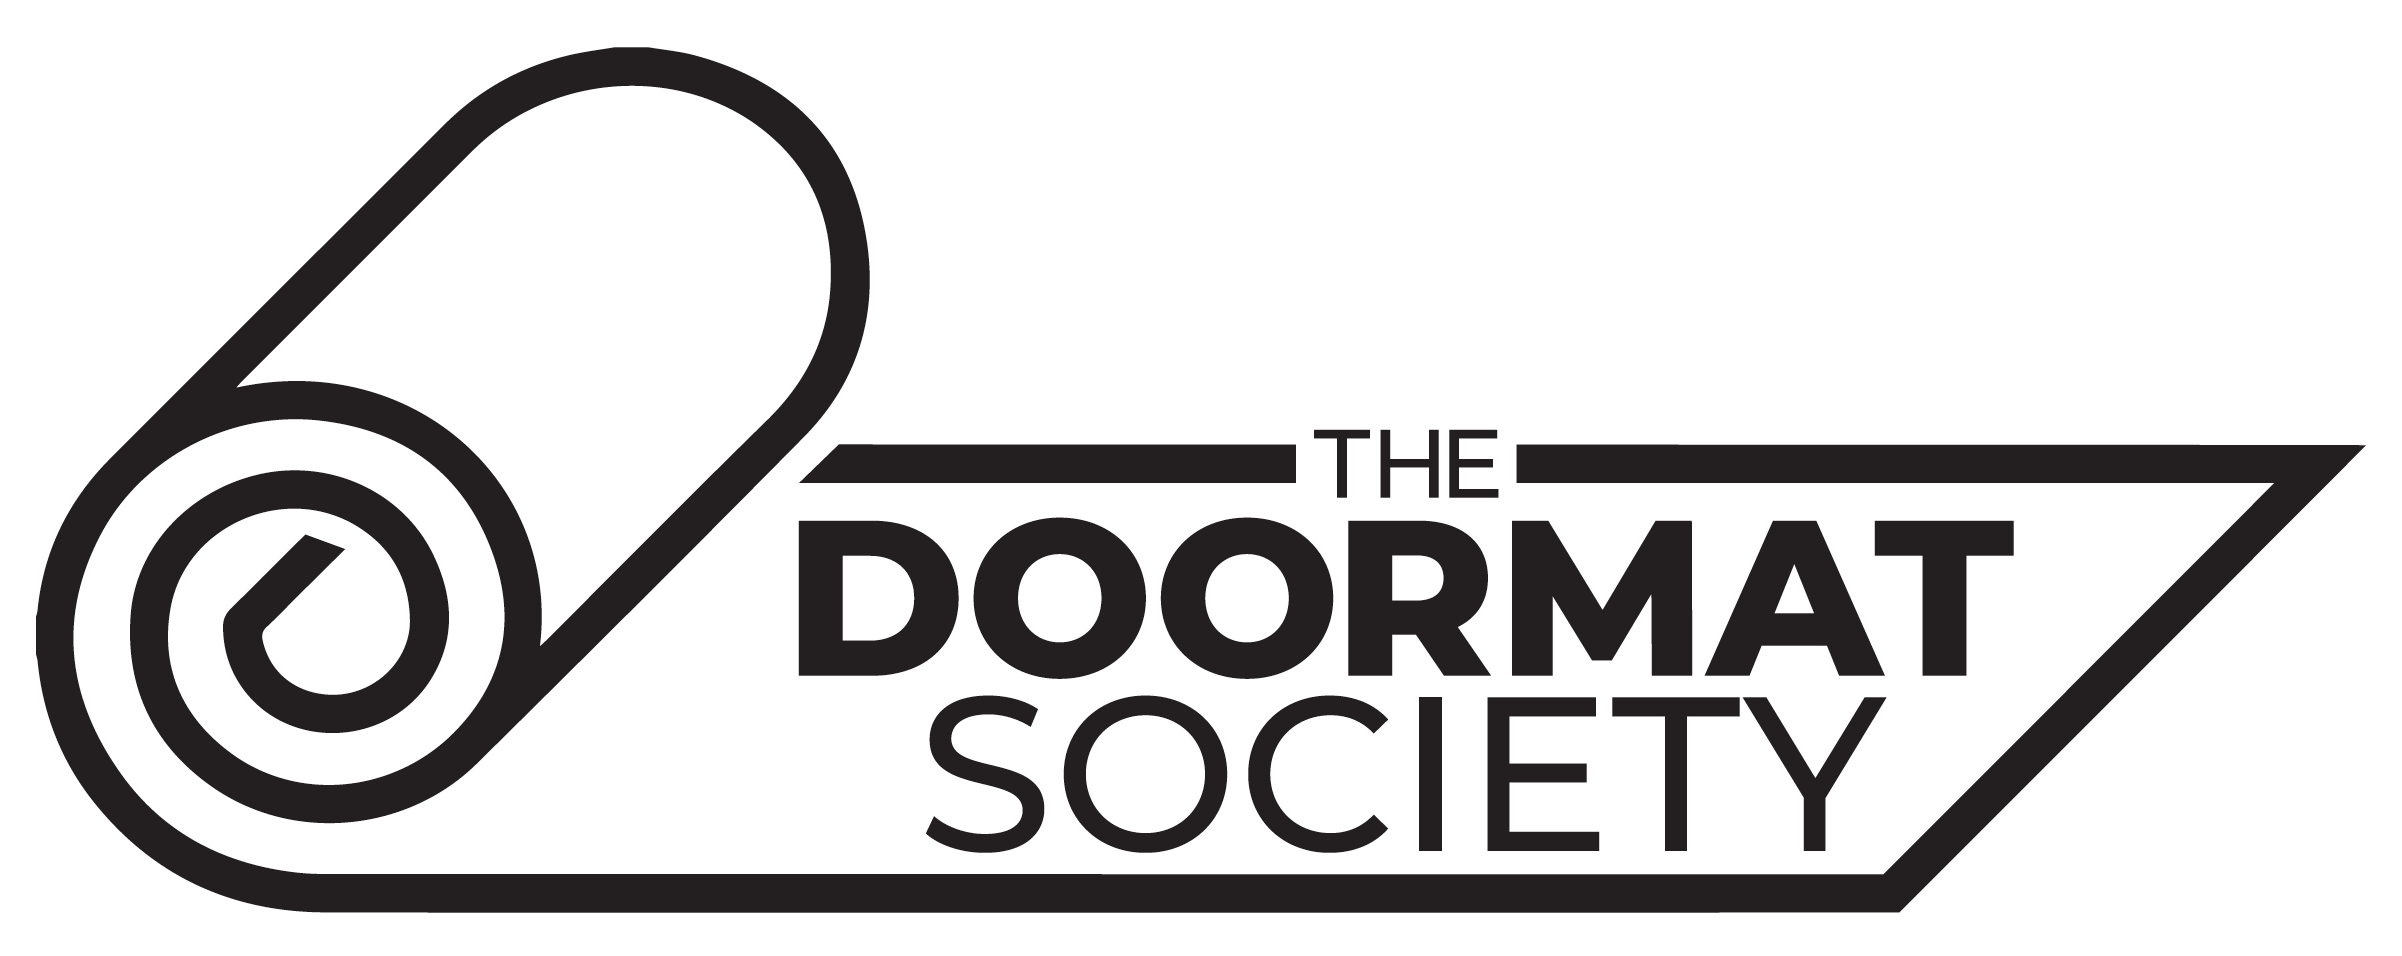 The Doormat Society